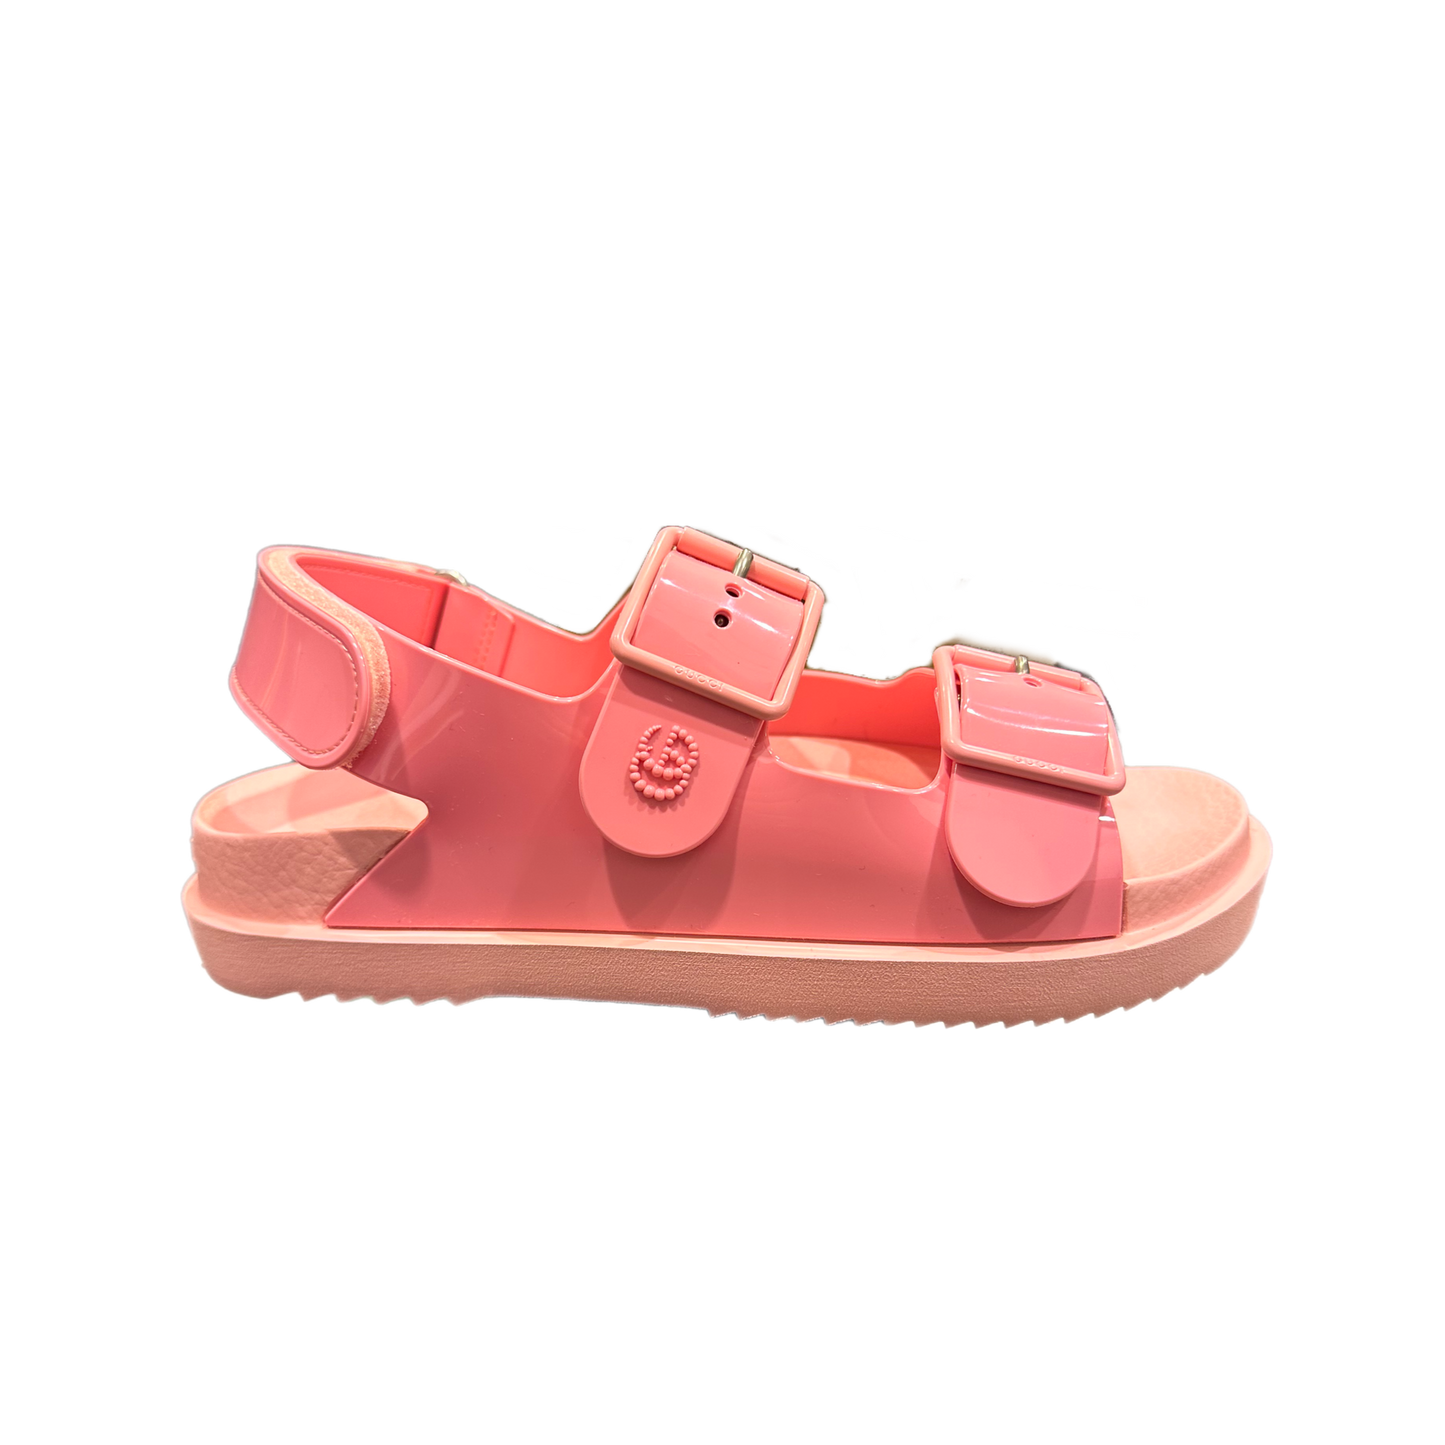 Gucci - "Pink PVC Sandals" - Size W 8